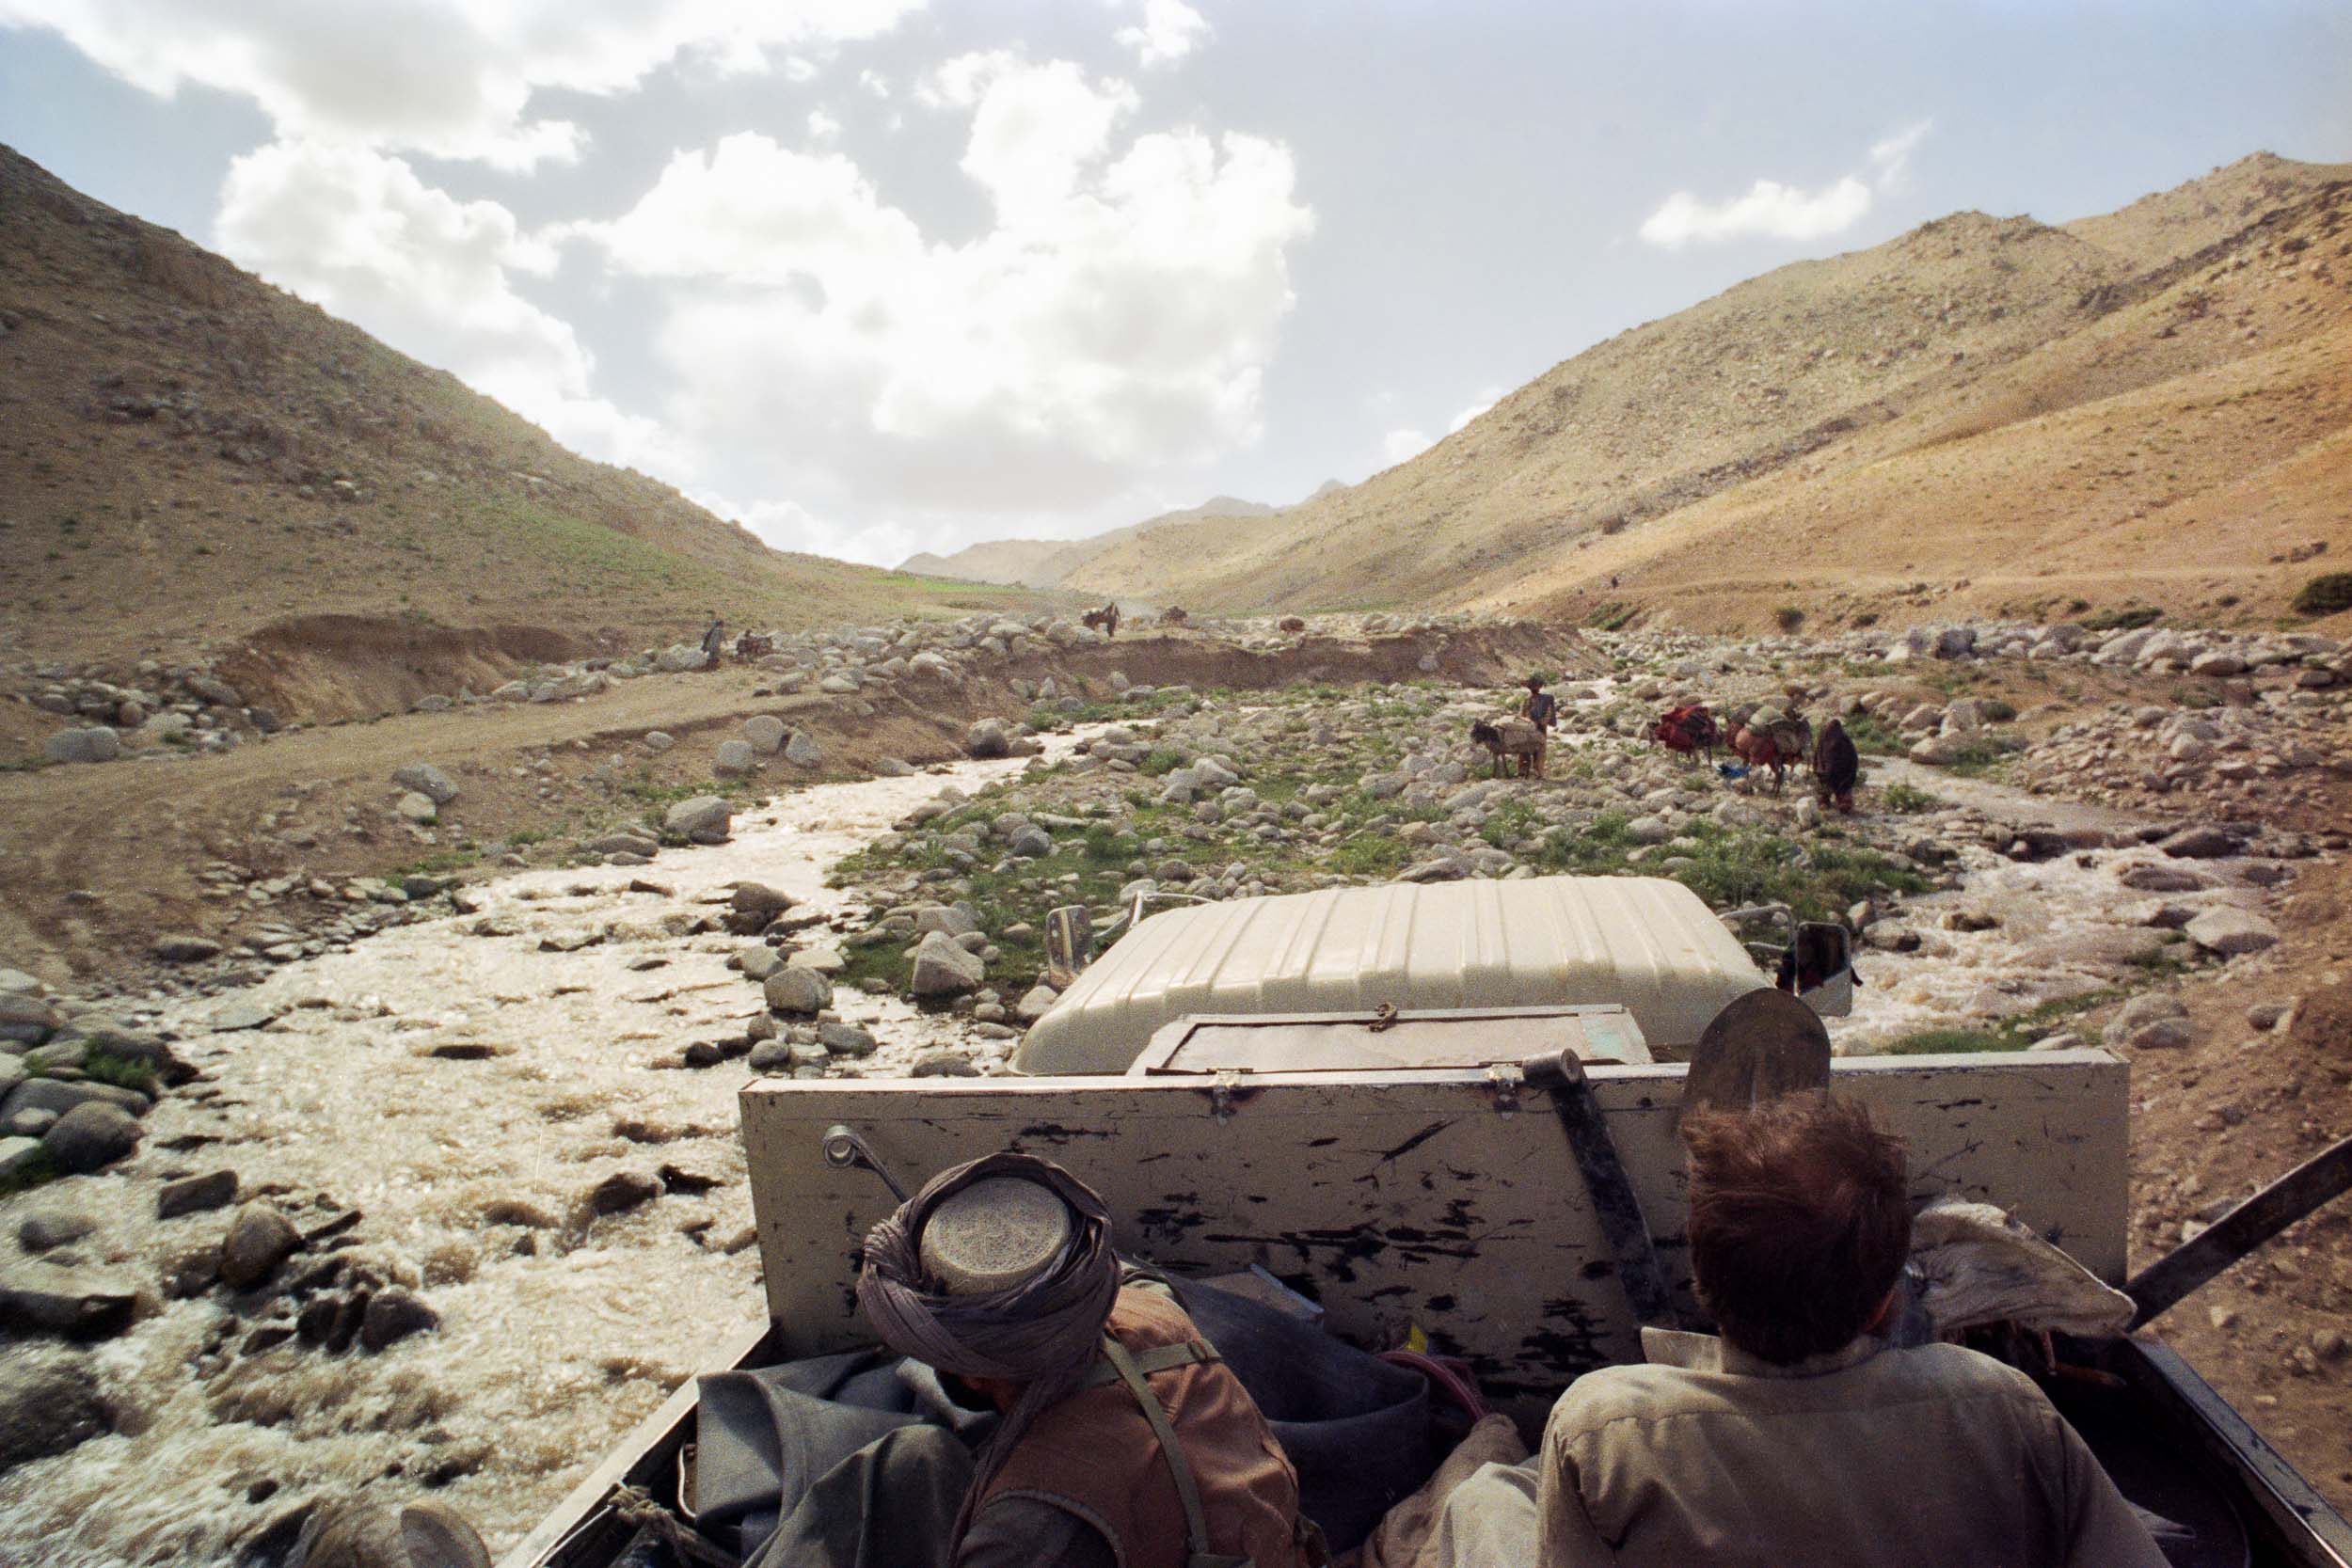 Fording a Stream, Afghanistan 1988